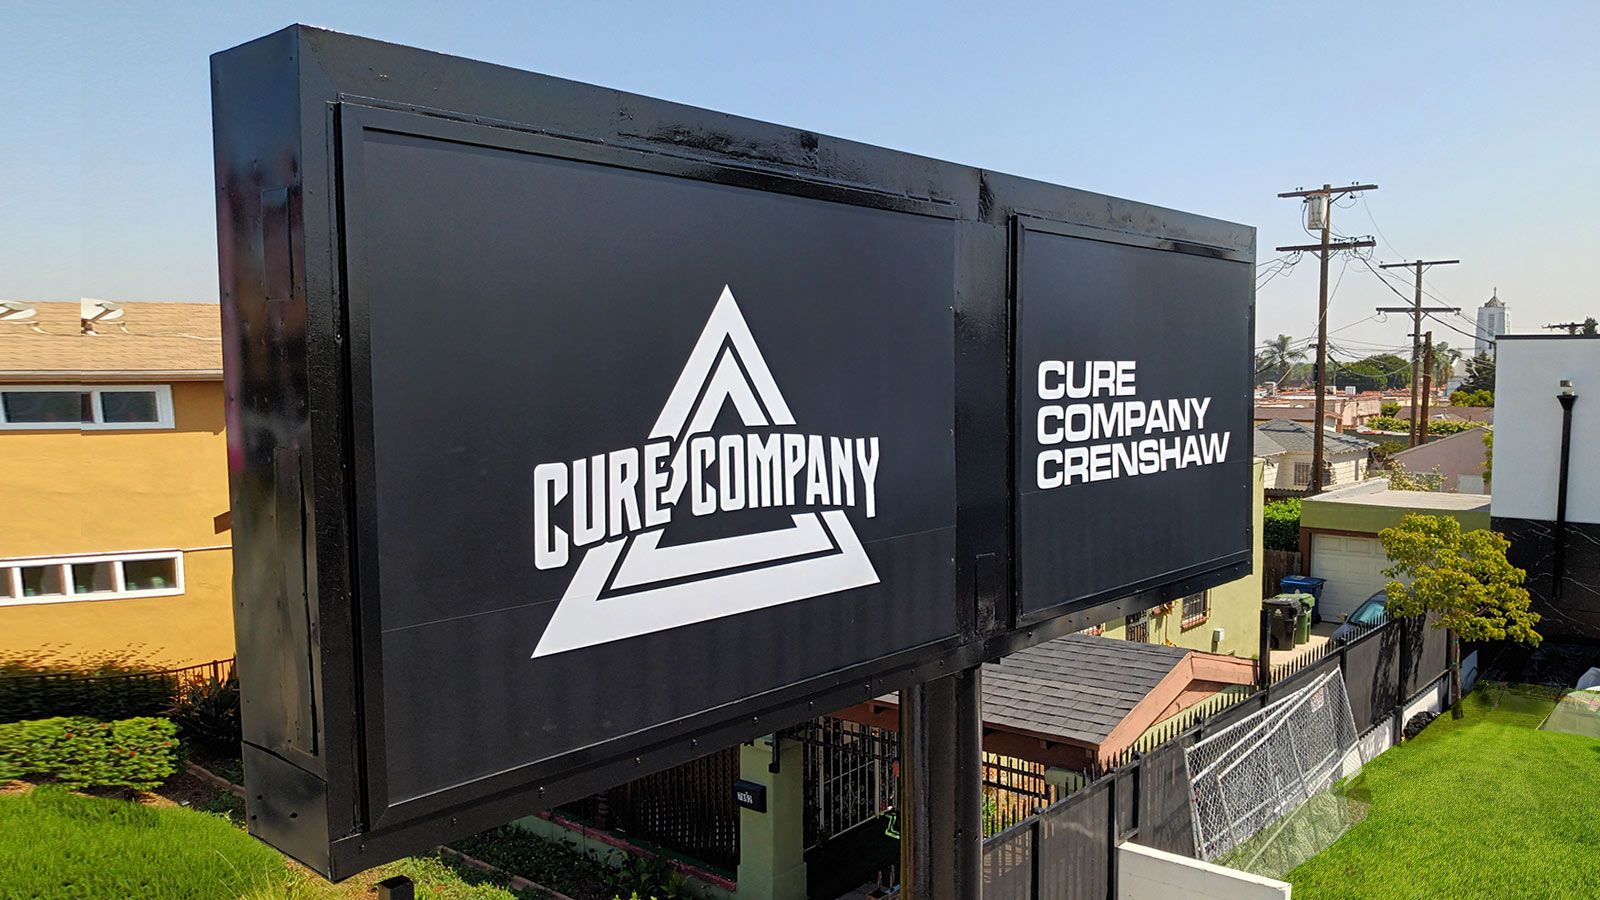 Cure Company pylon sign